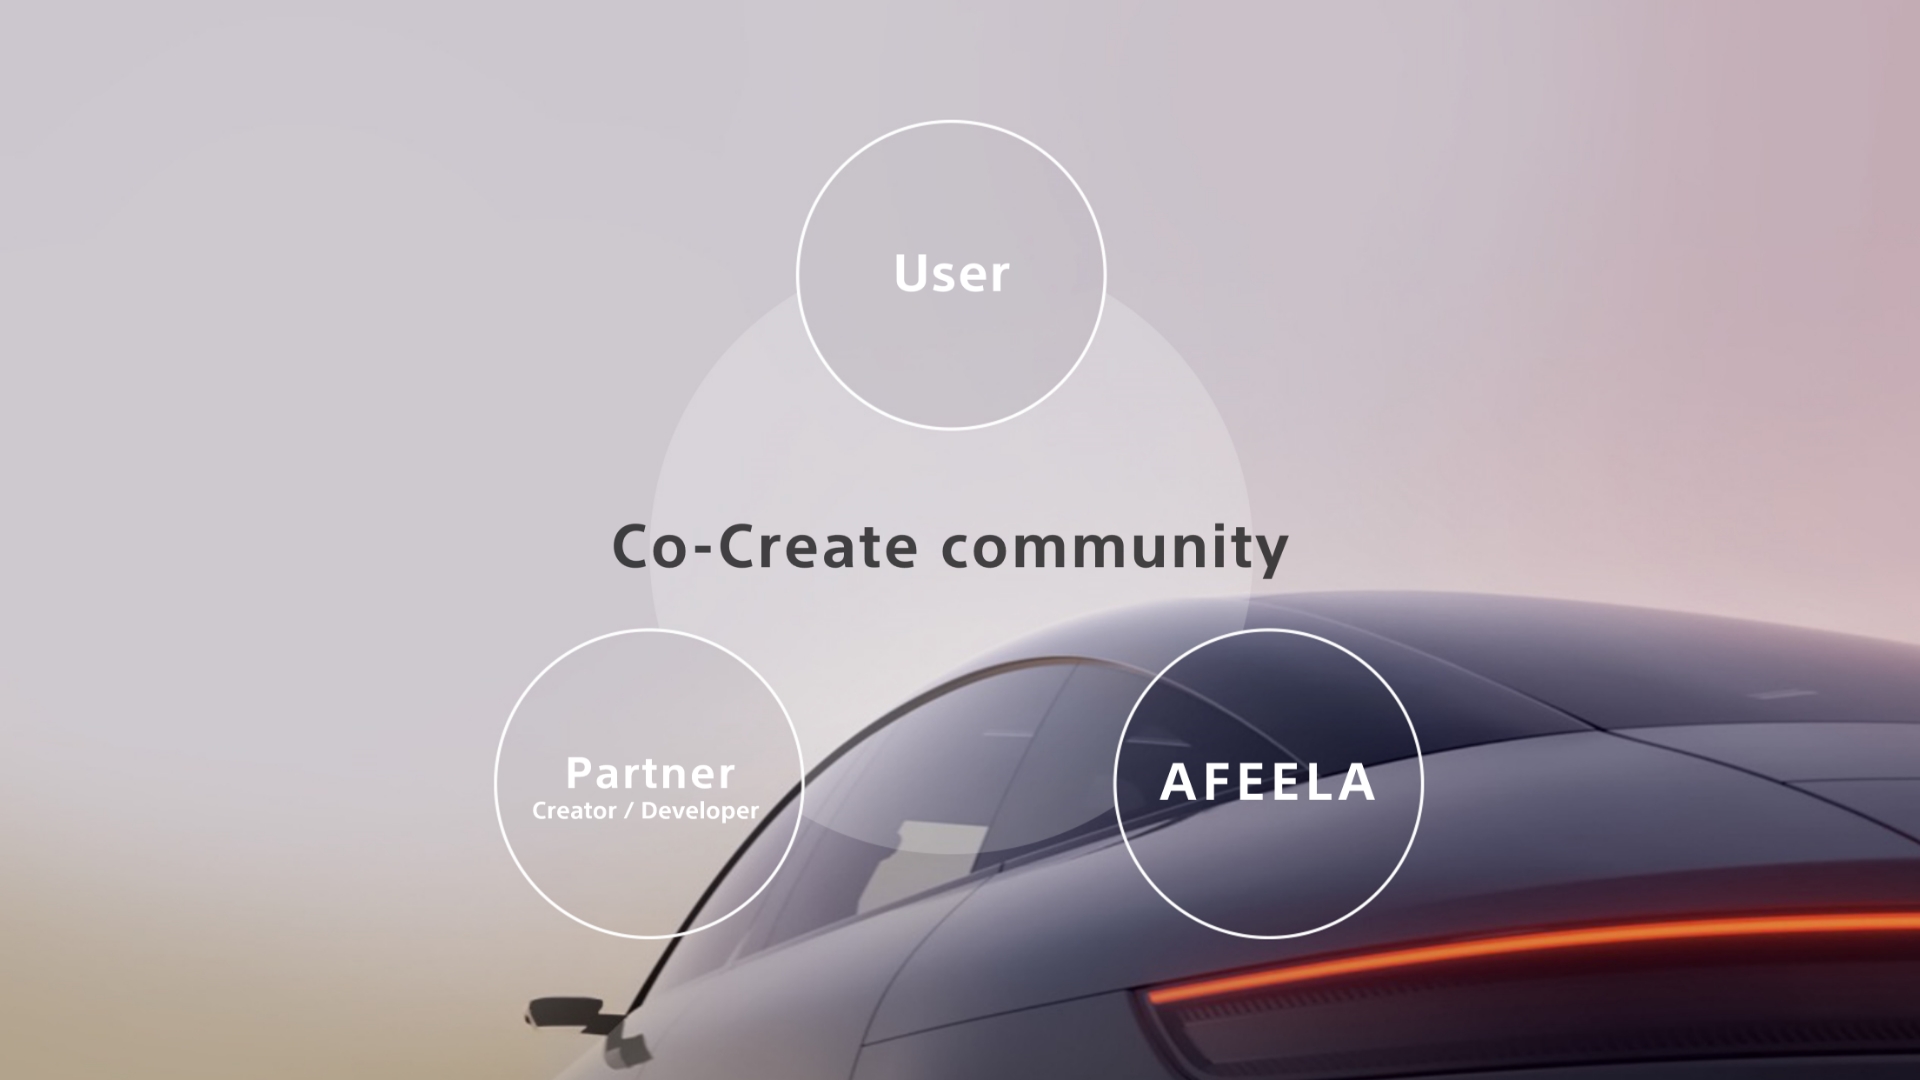 Co-Create community